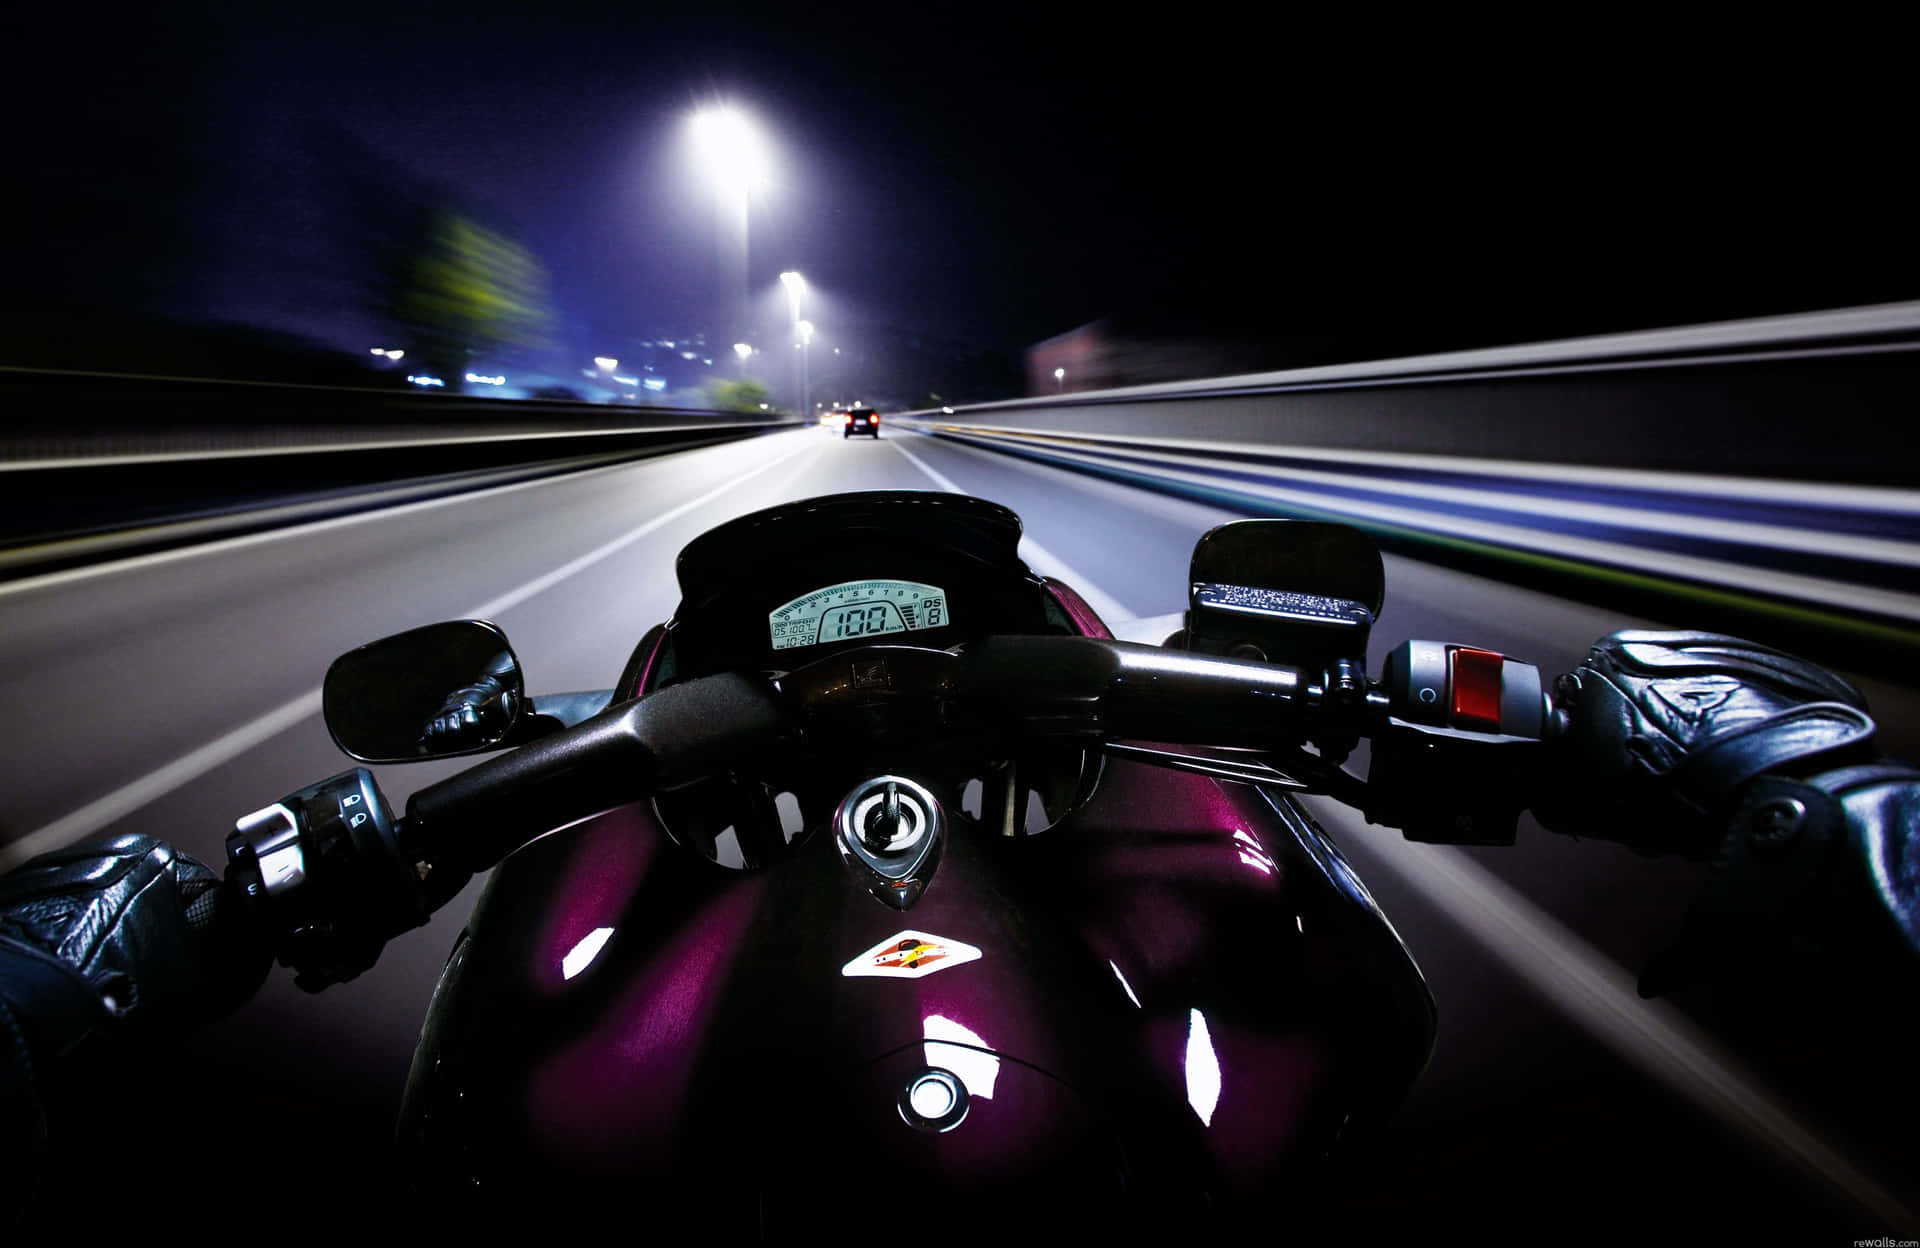 Motorcycle Speeding Night Ride